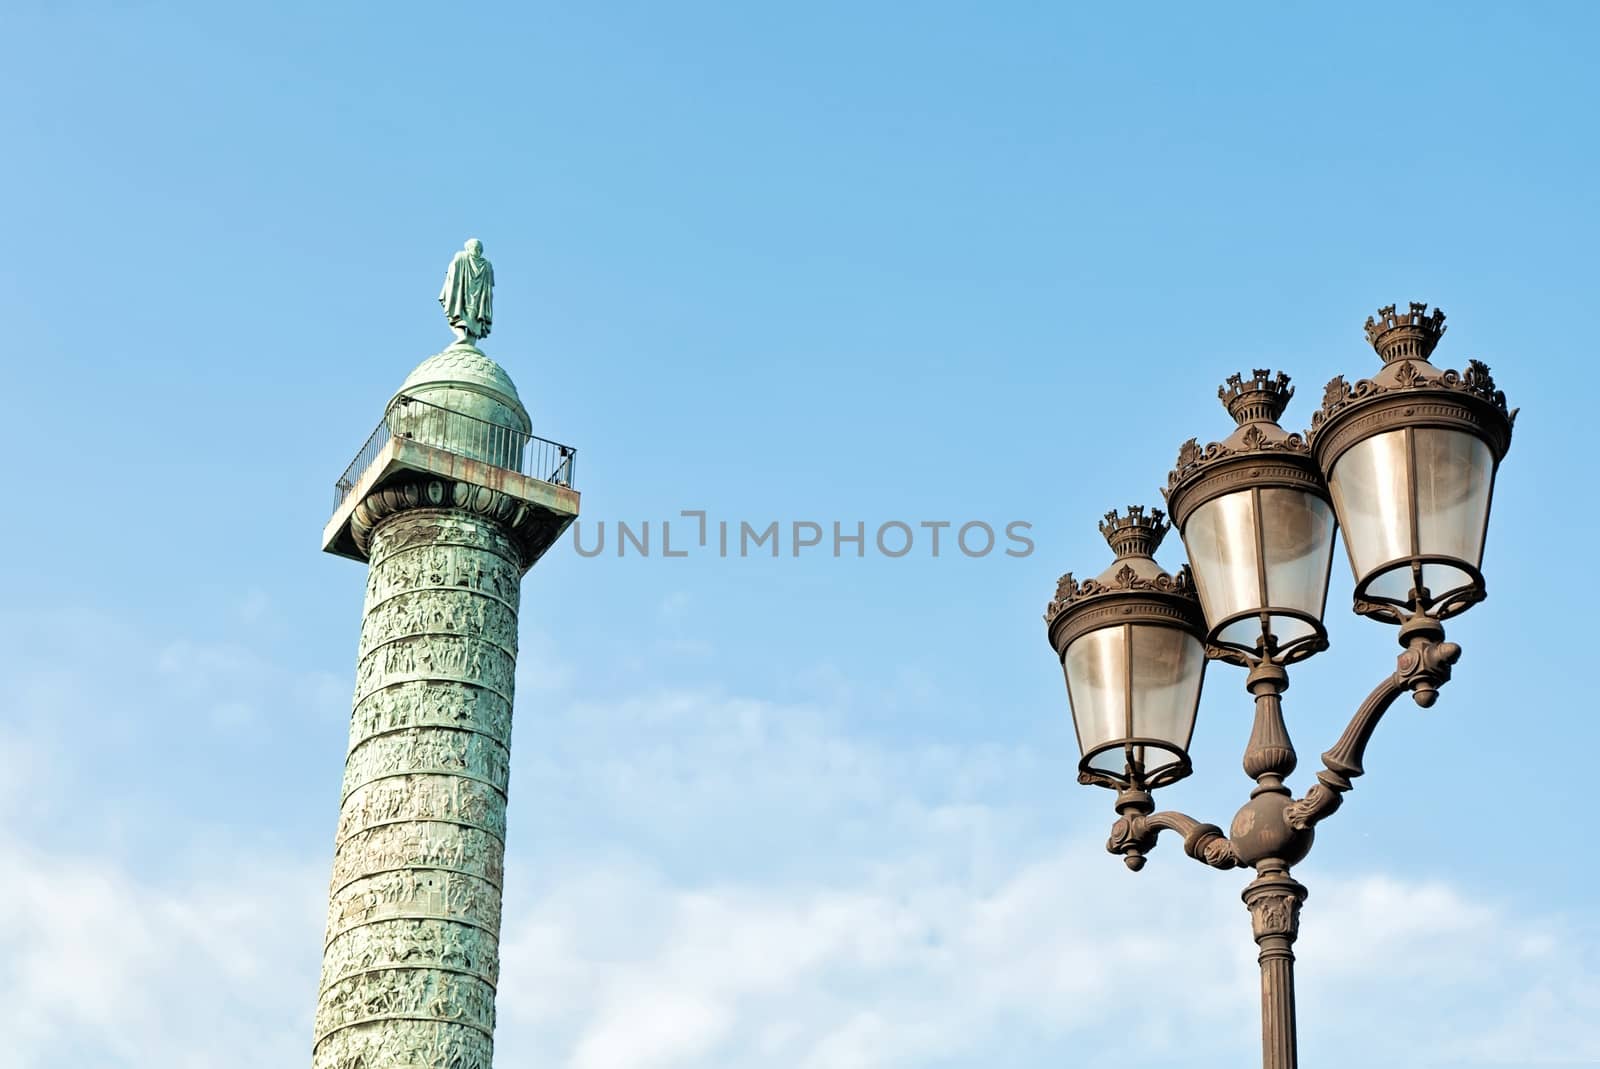 Napoleon's column and street lamp in Paris by mitakag